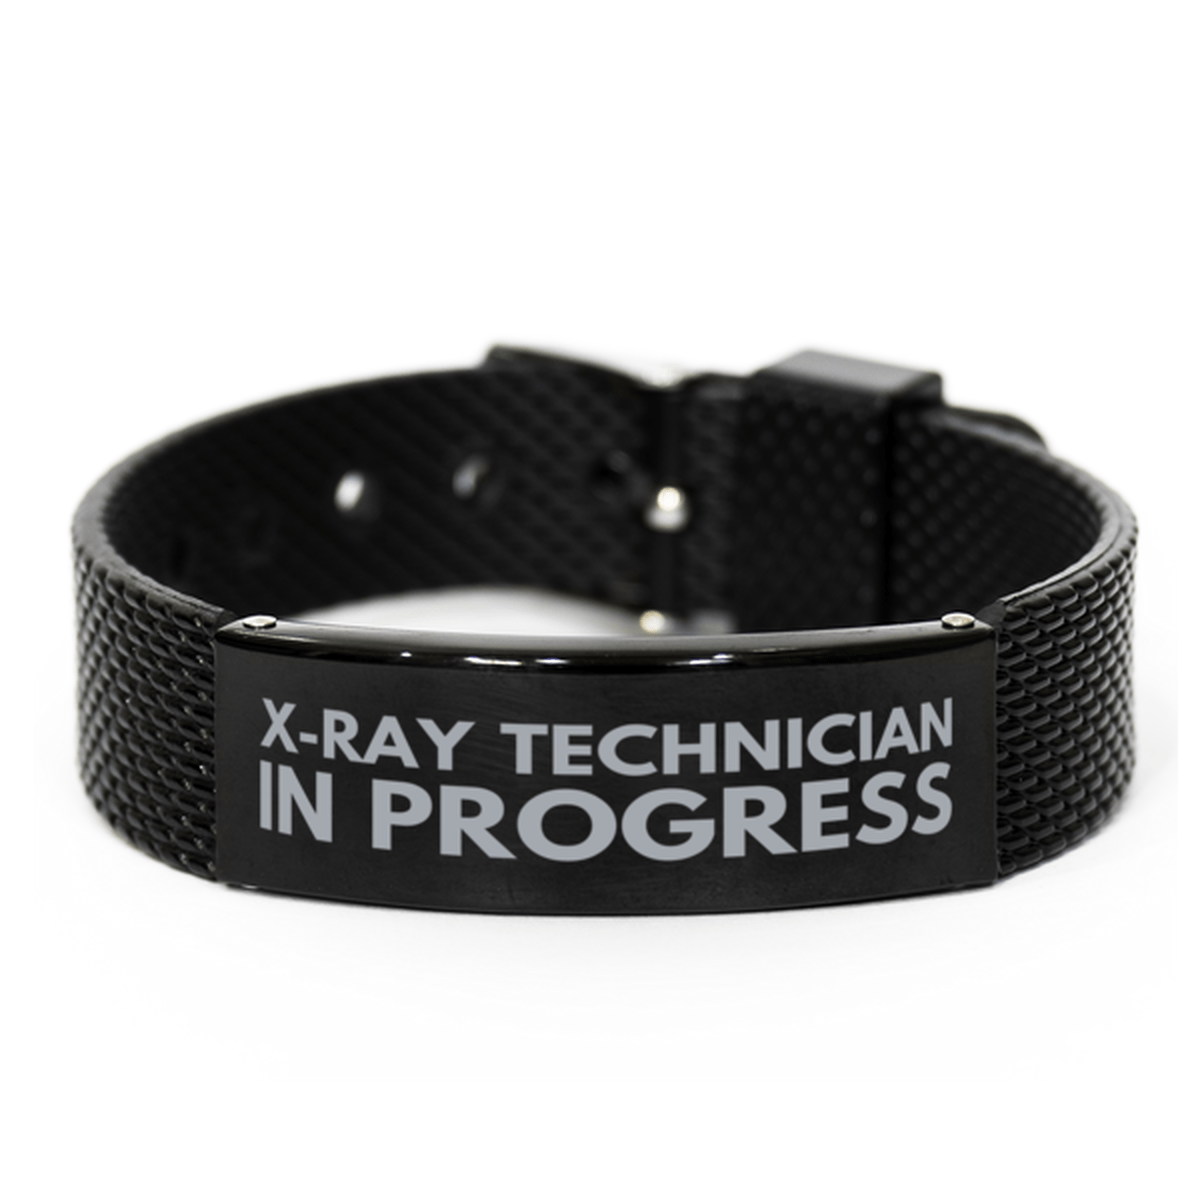 Inspirational X-Ray Technician Black Shark Mesh Bracelet, X-Ray Technician In Progress, Best Graduation Gifts for Students